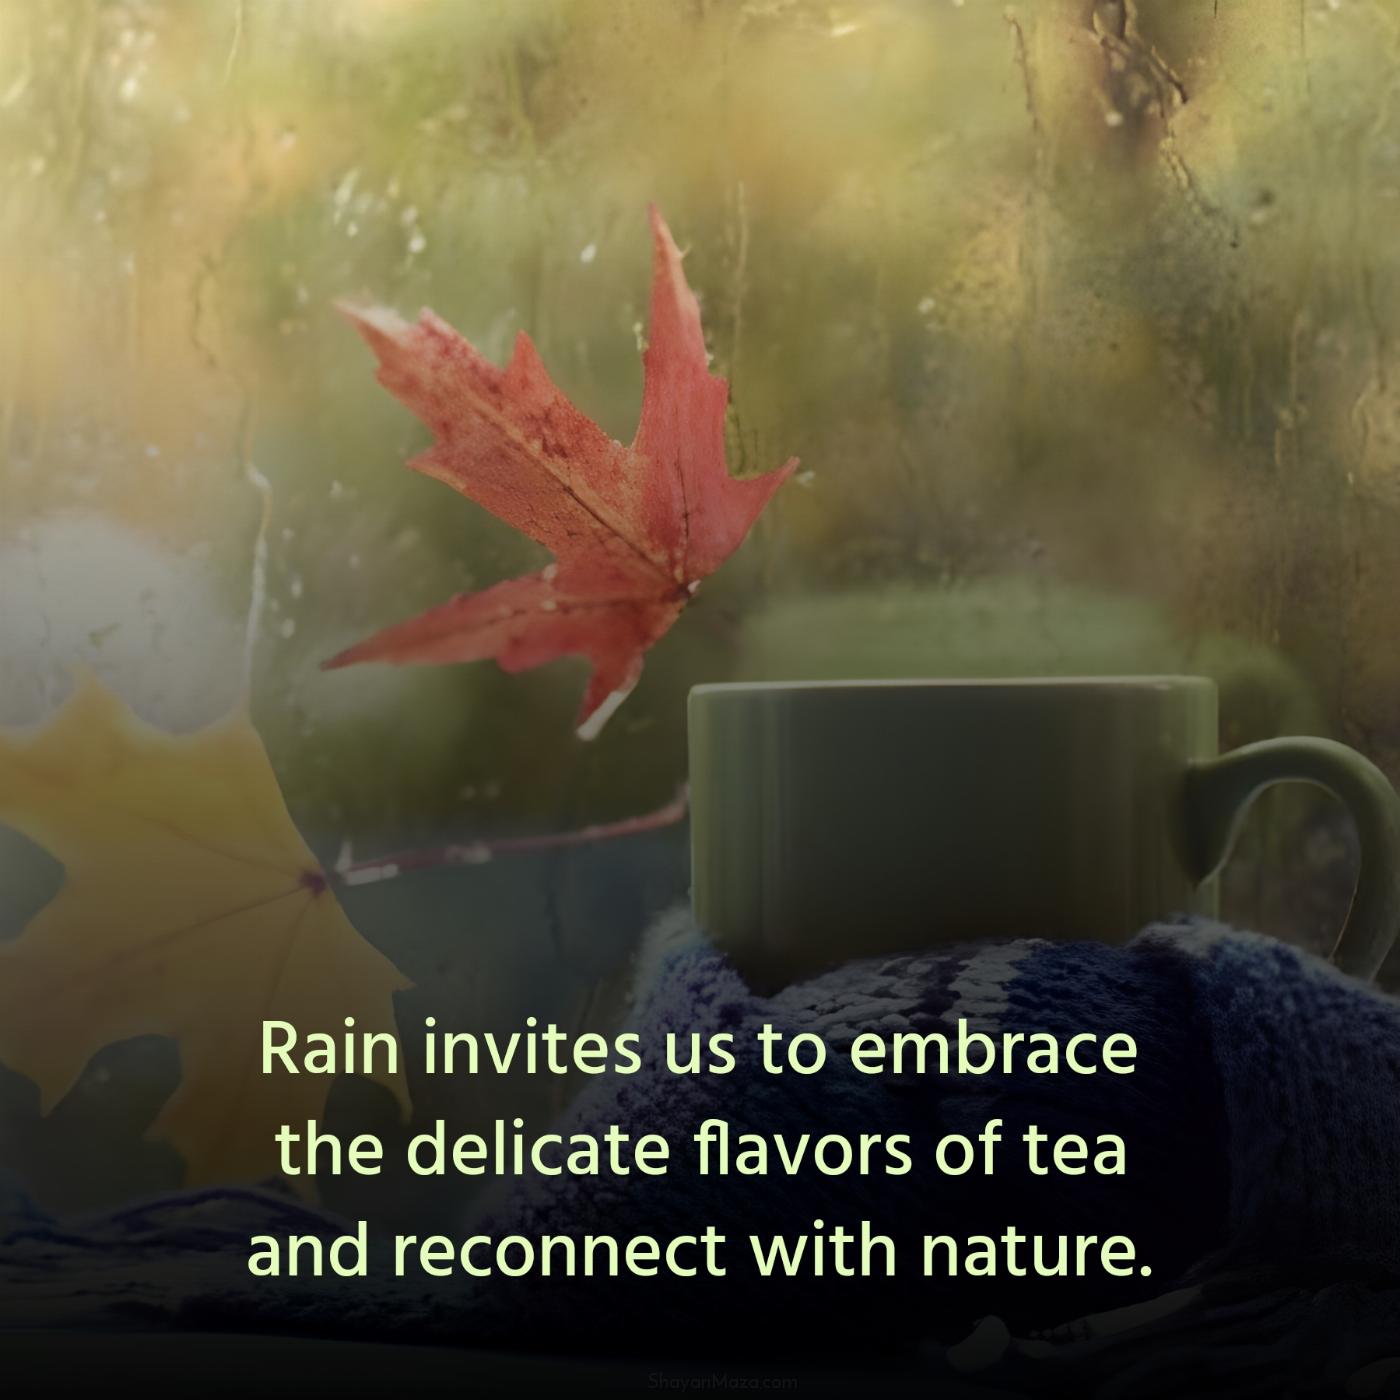 Rain invites us to embrace the delicate flavors of tea